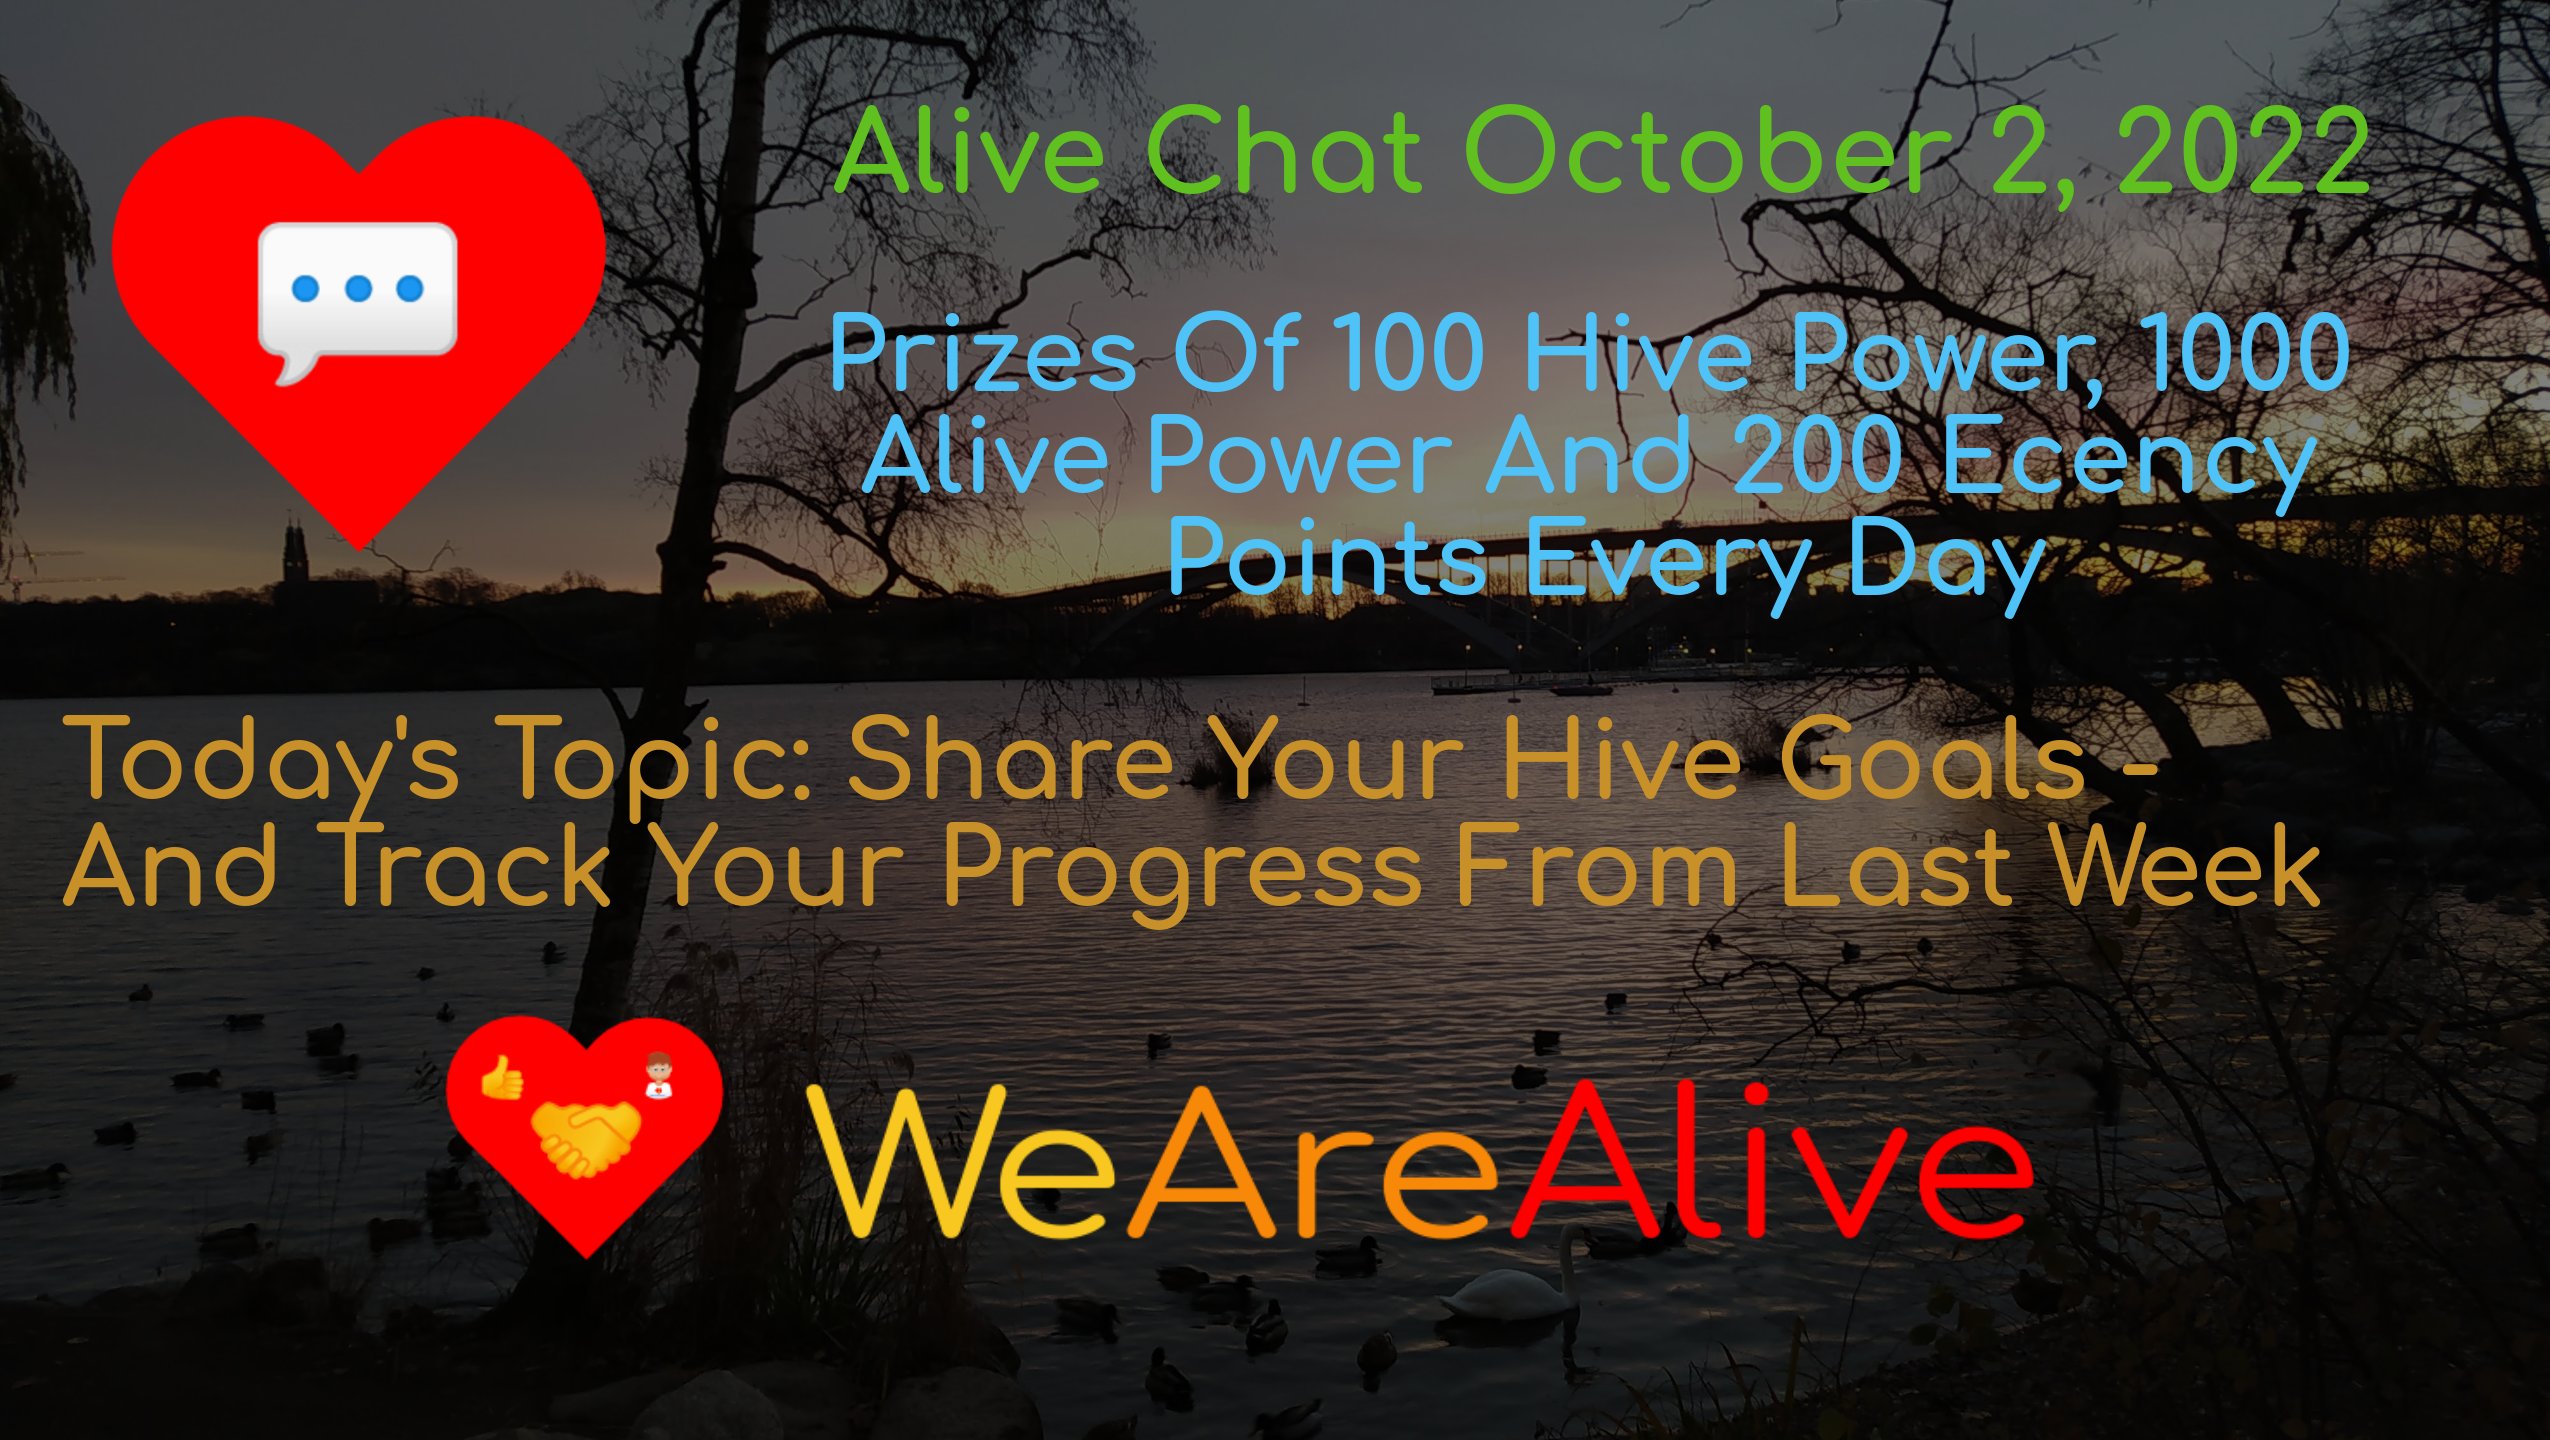 @alive.chat/alive-chat-october-2-2022